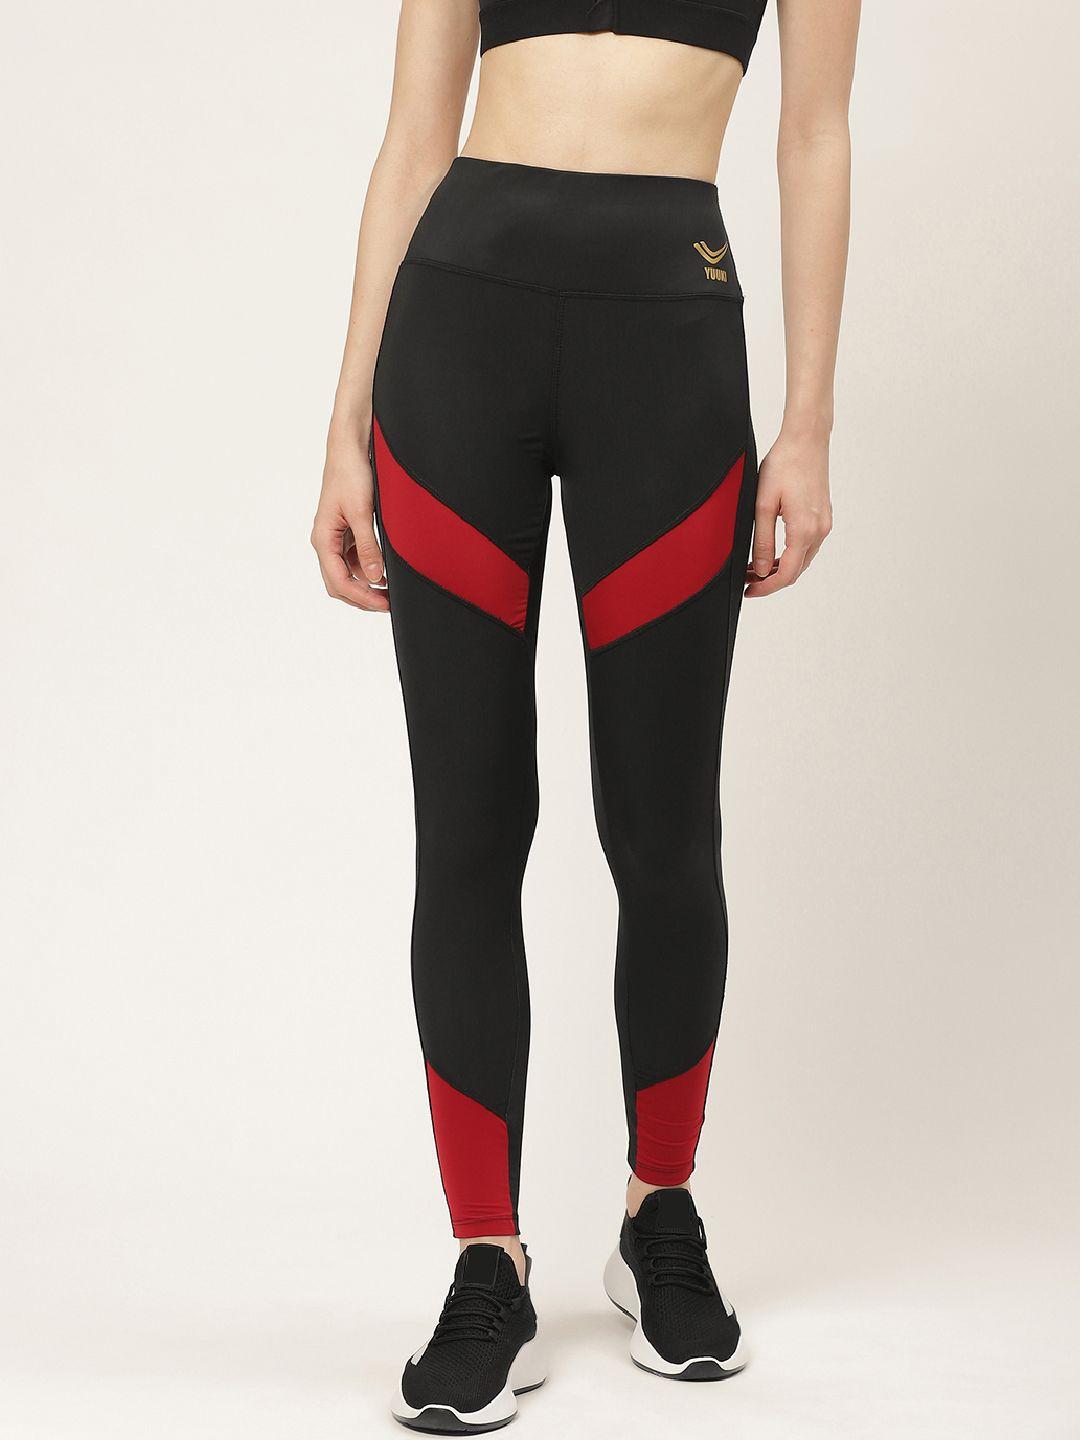 yuuki women black & red striped detail training or gym tights